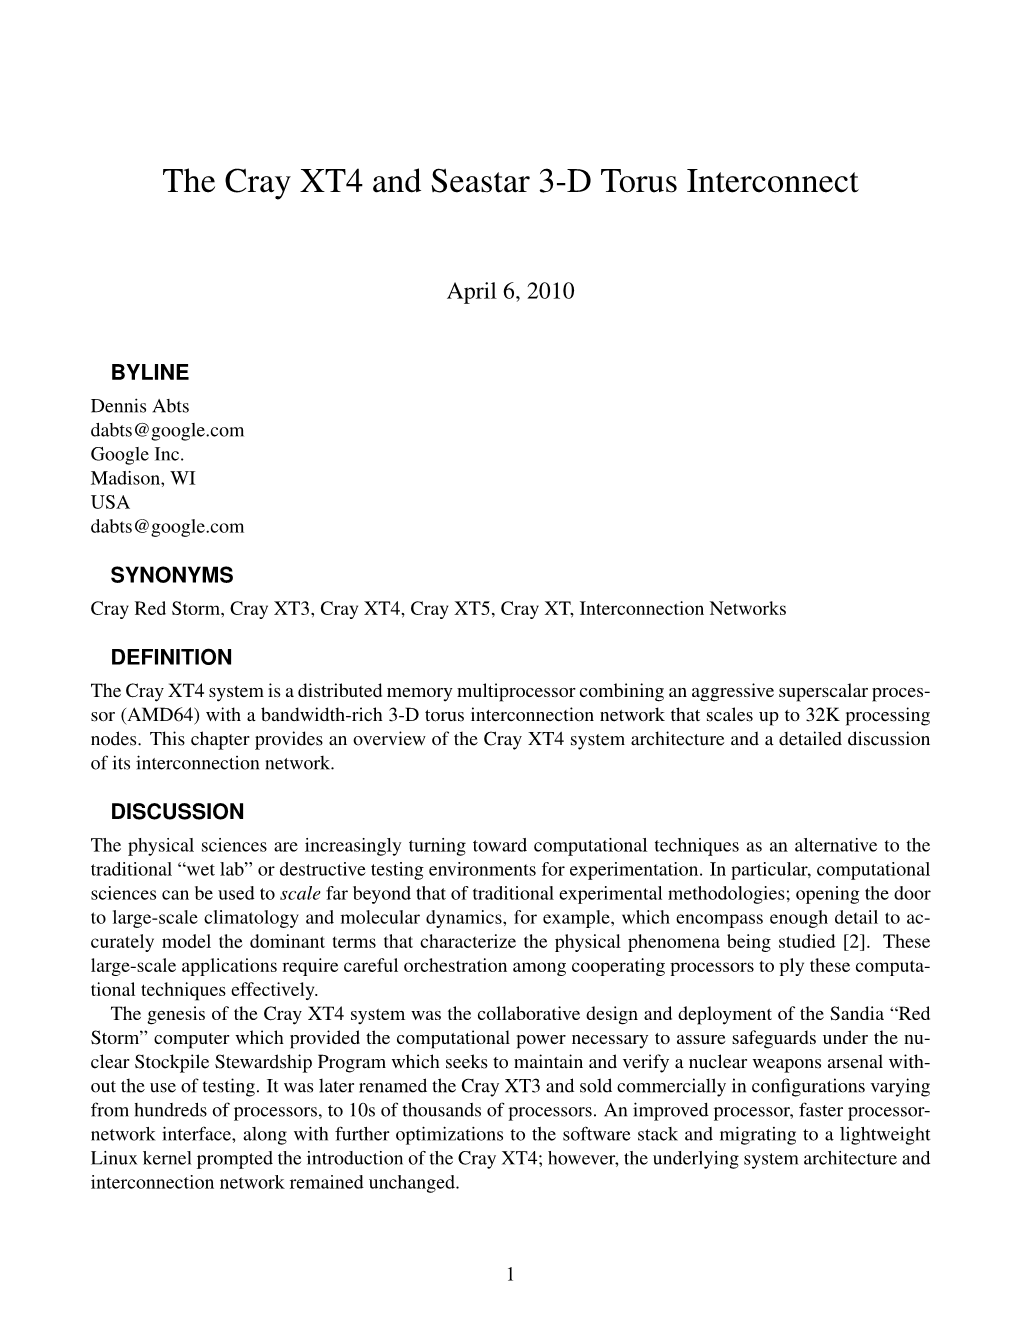 The Cray XT4 and Seastar 3-D Torus Interconnect